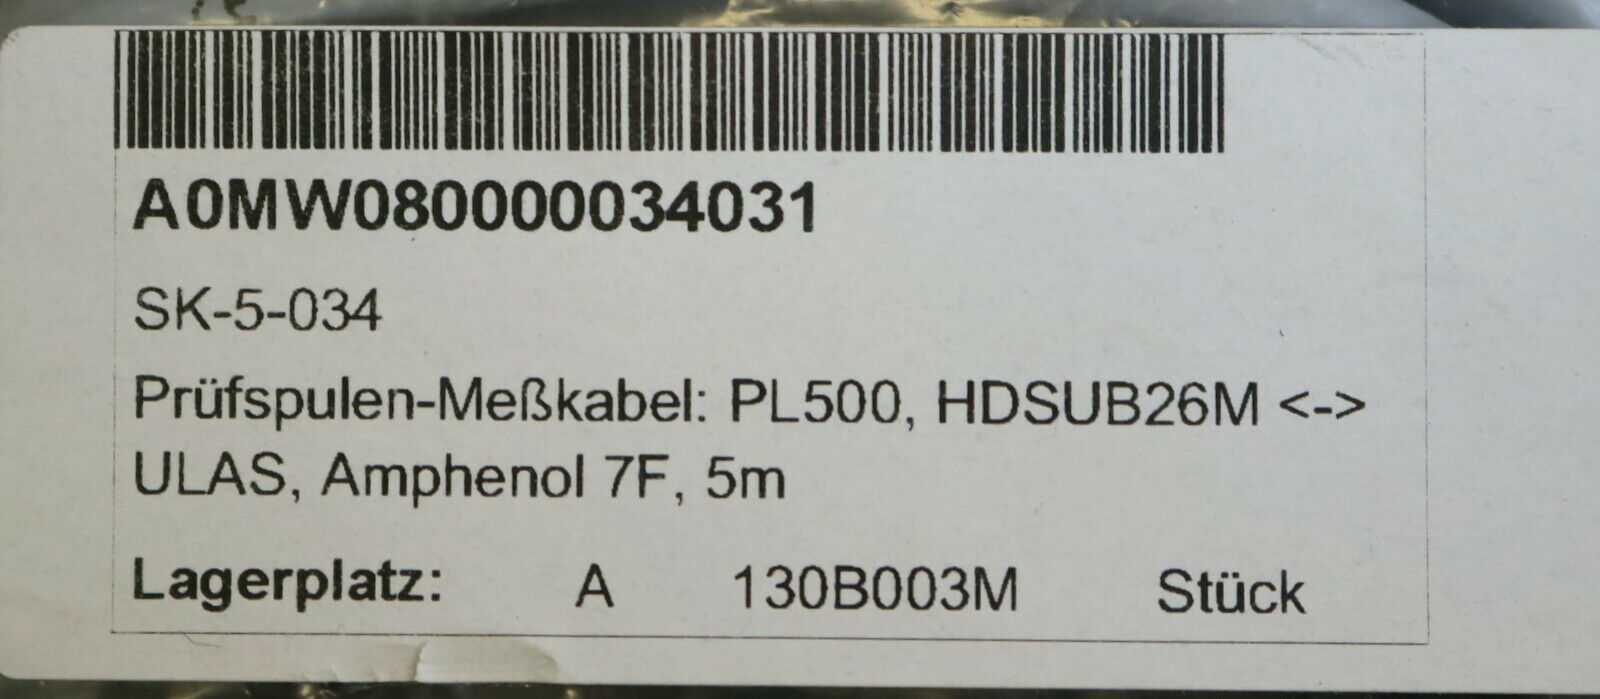 AMPHENOL Prüfspulen-Messkabel PL500 HDSUB26M ULAS Amphenol 7F - Typ SK-5-034